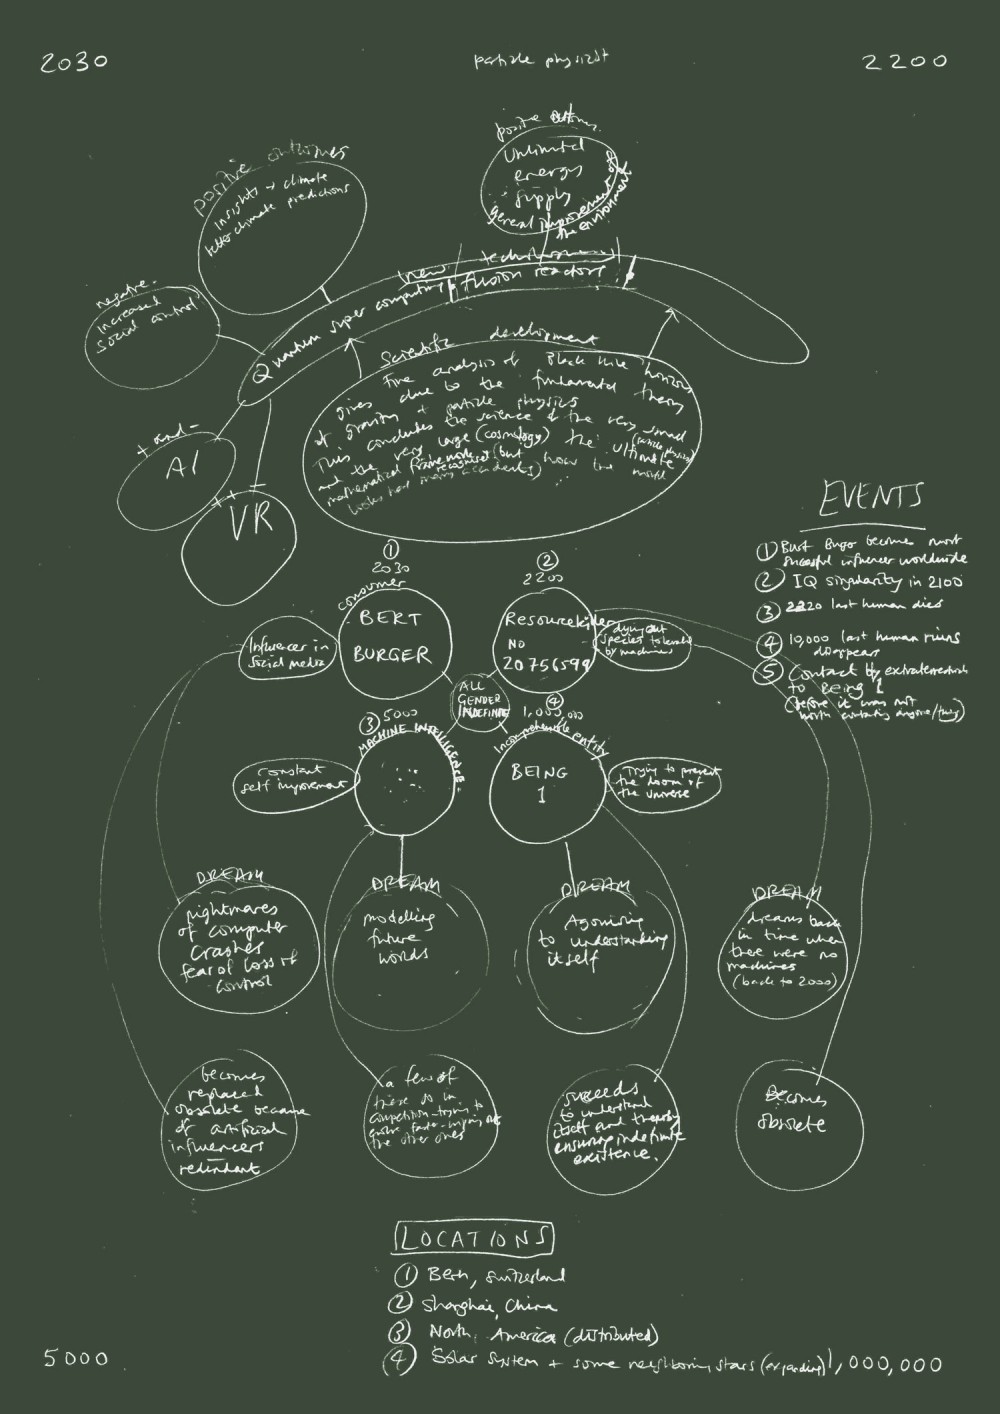 Science fiction short story writing workshop/ Plot diagram/B.K., theoretical physicist, CERN